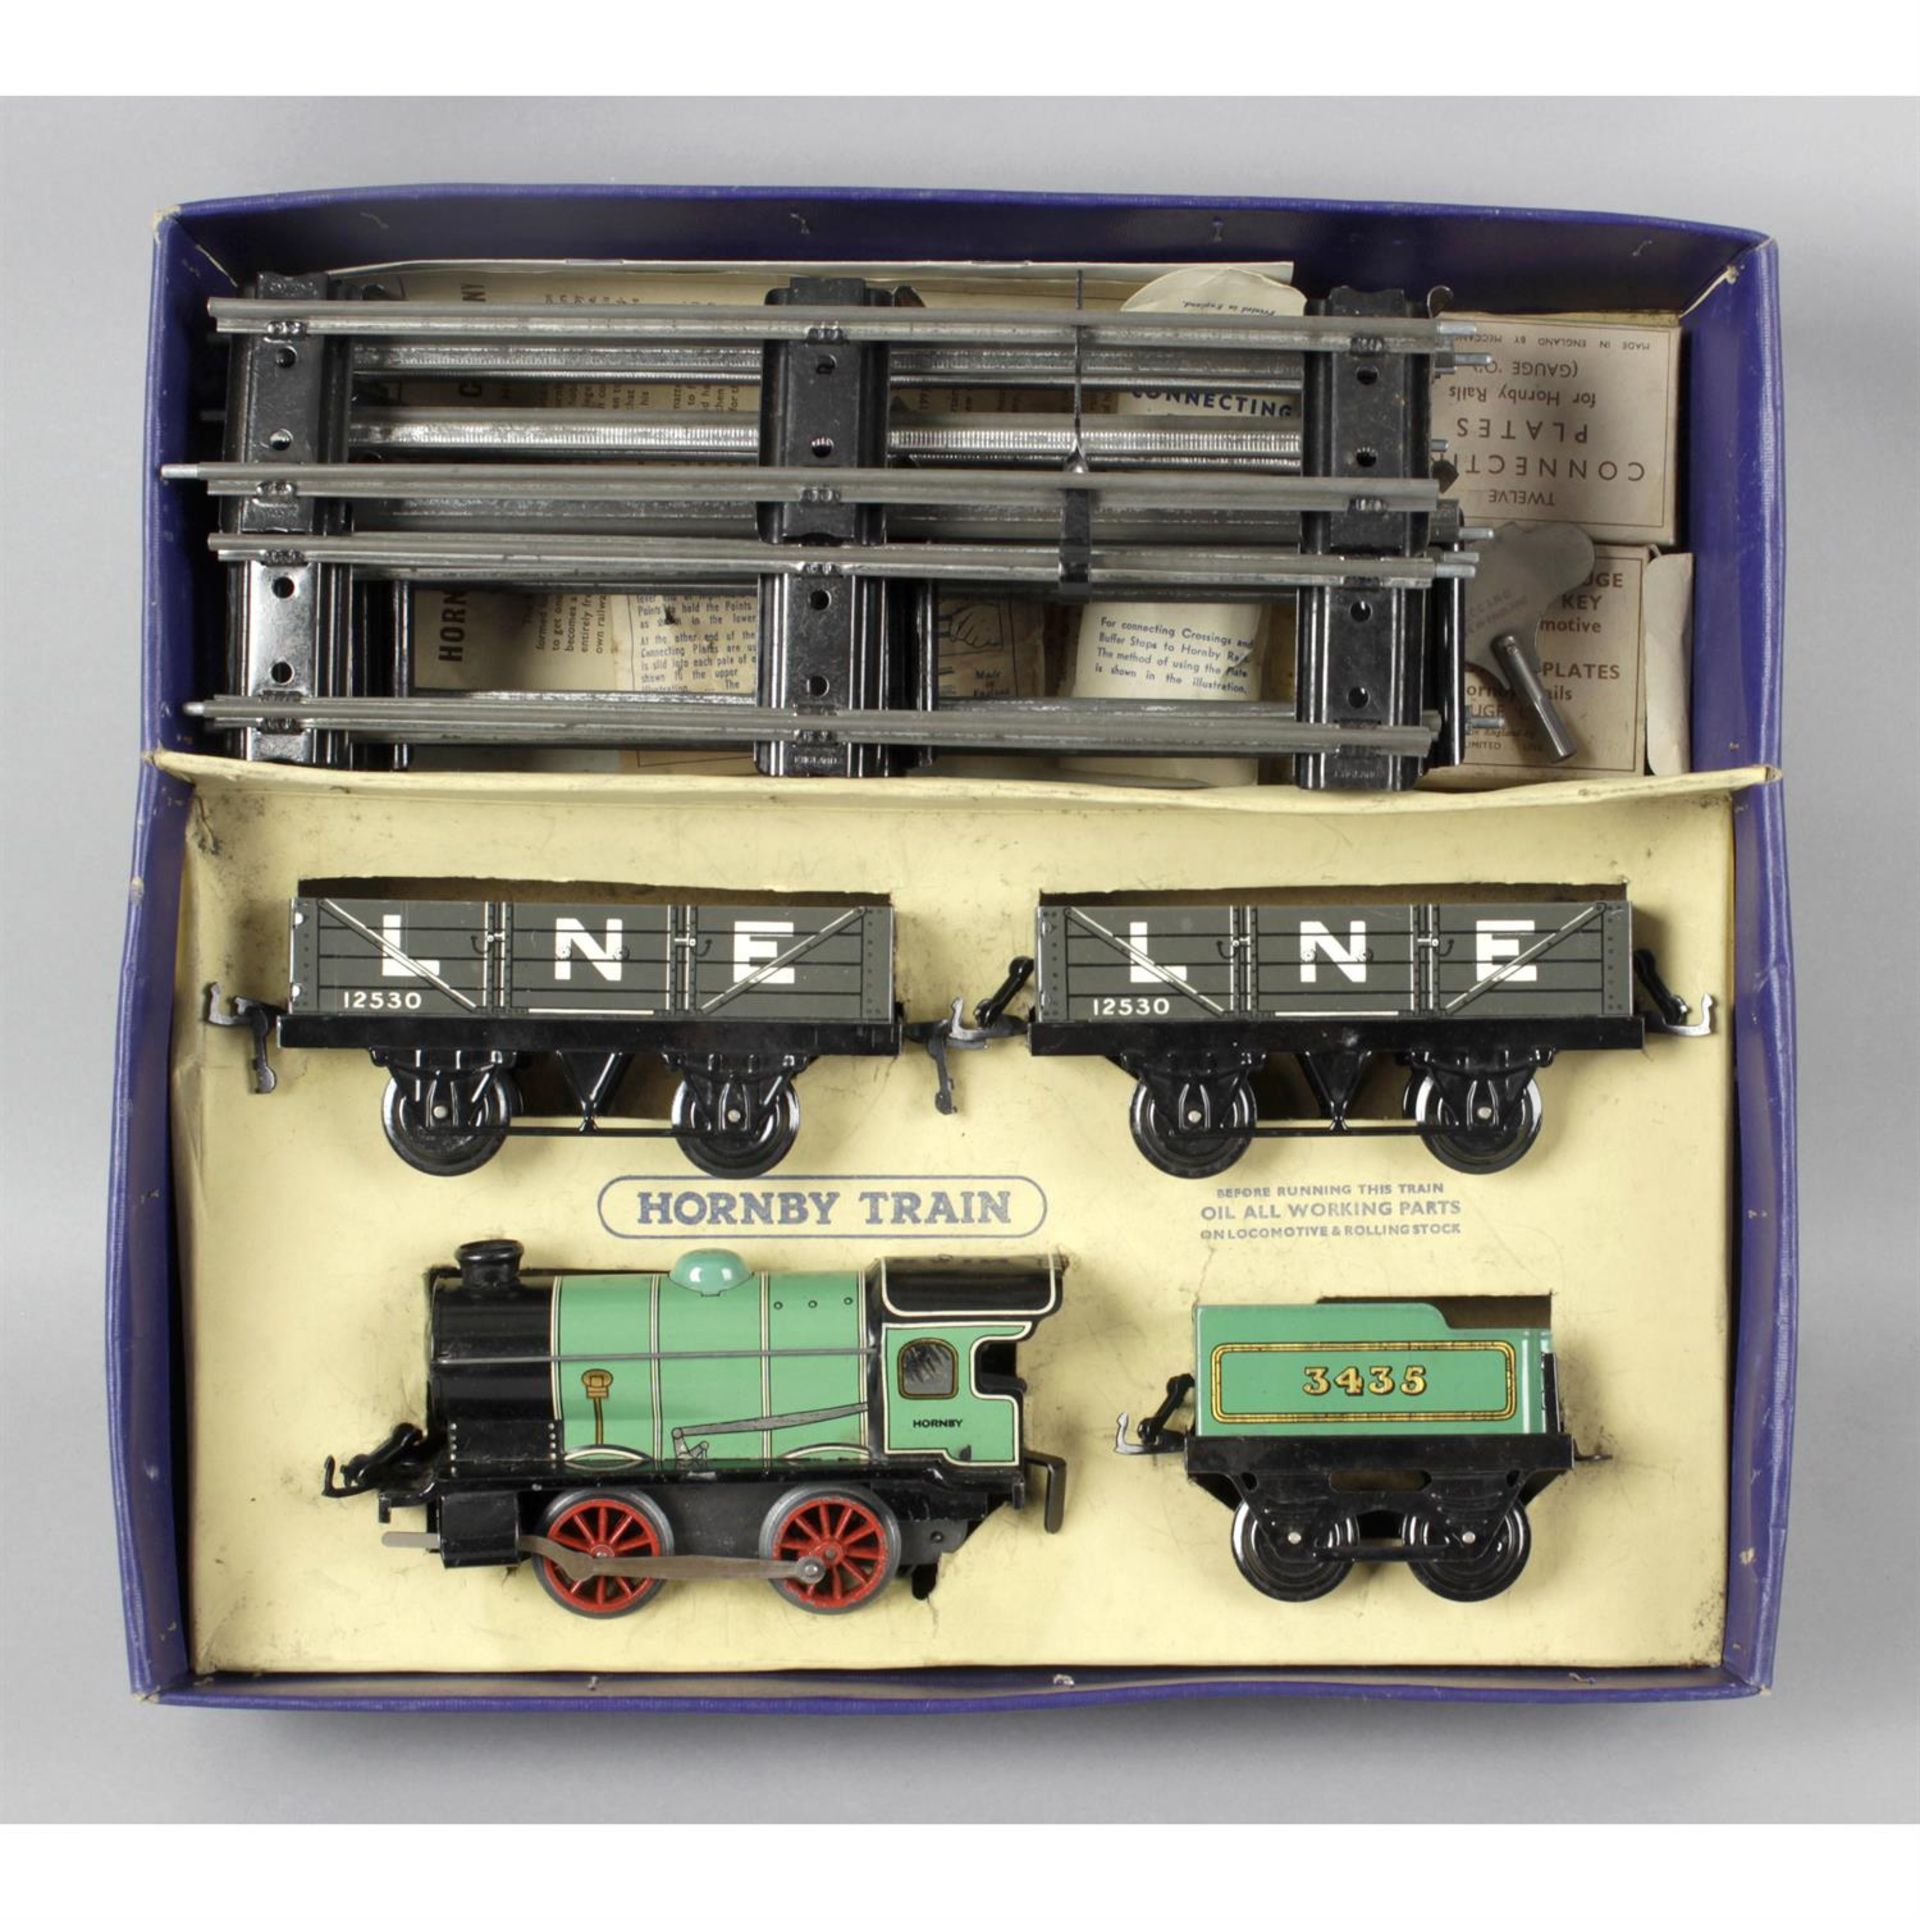 Hornby tinplate, clockwork O Gauge M1 model train goods set and other Hornby trains